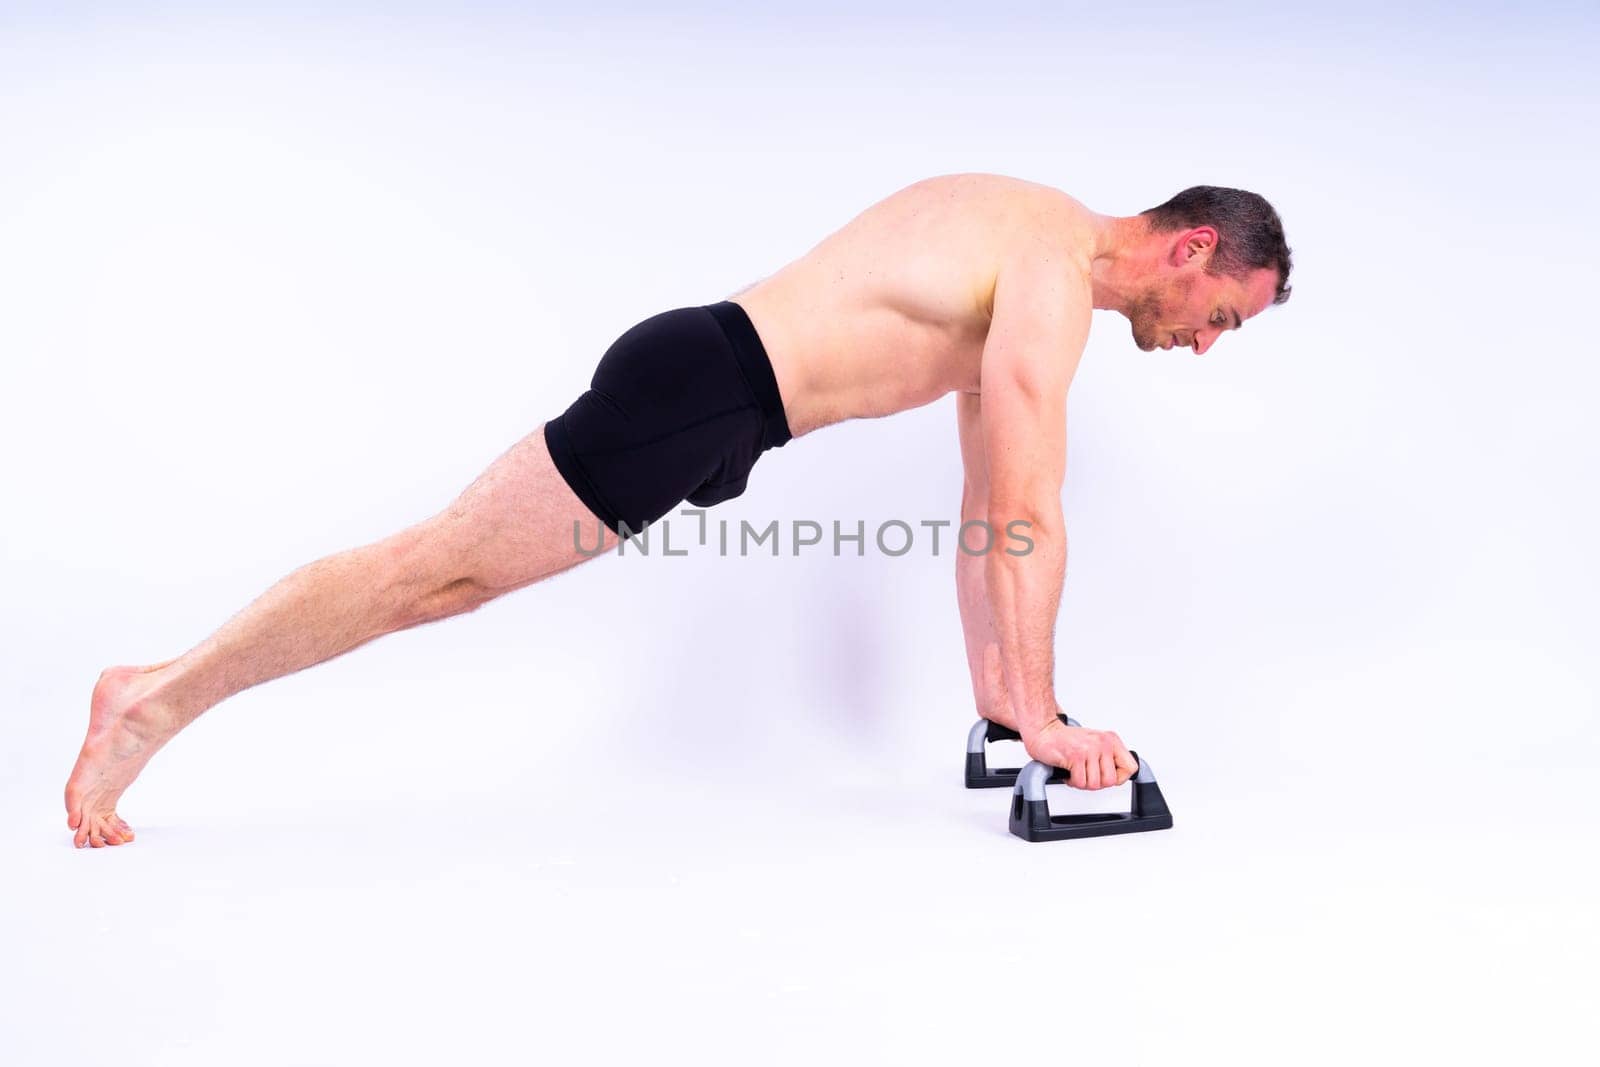 Shirtless muscular athlete do push-up on push up bars. Full body man on white studio background.